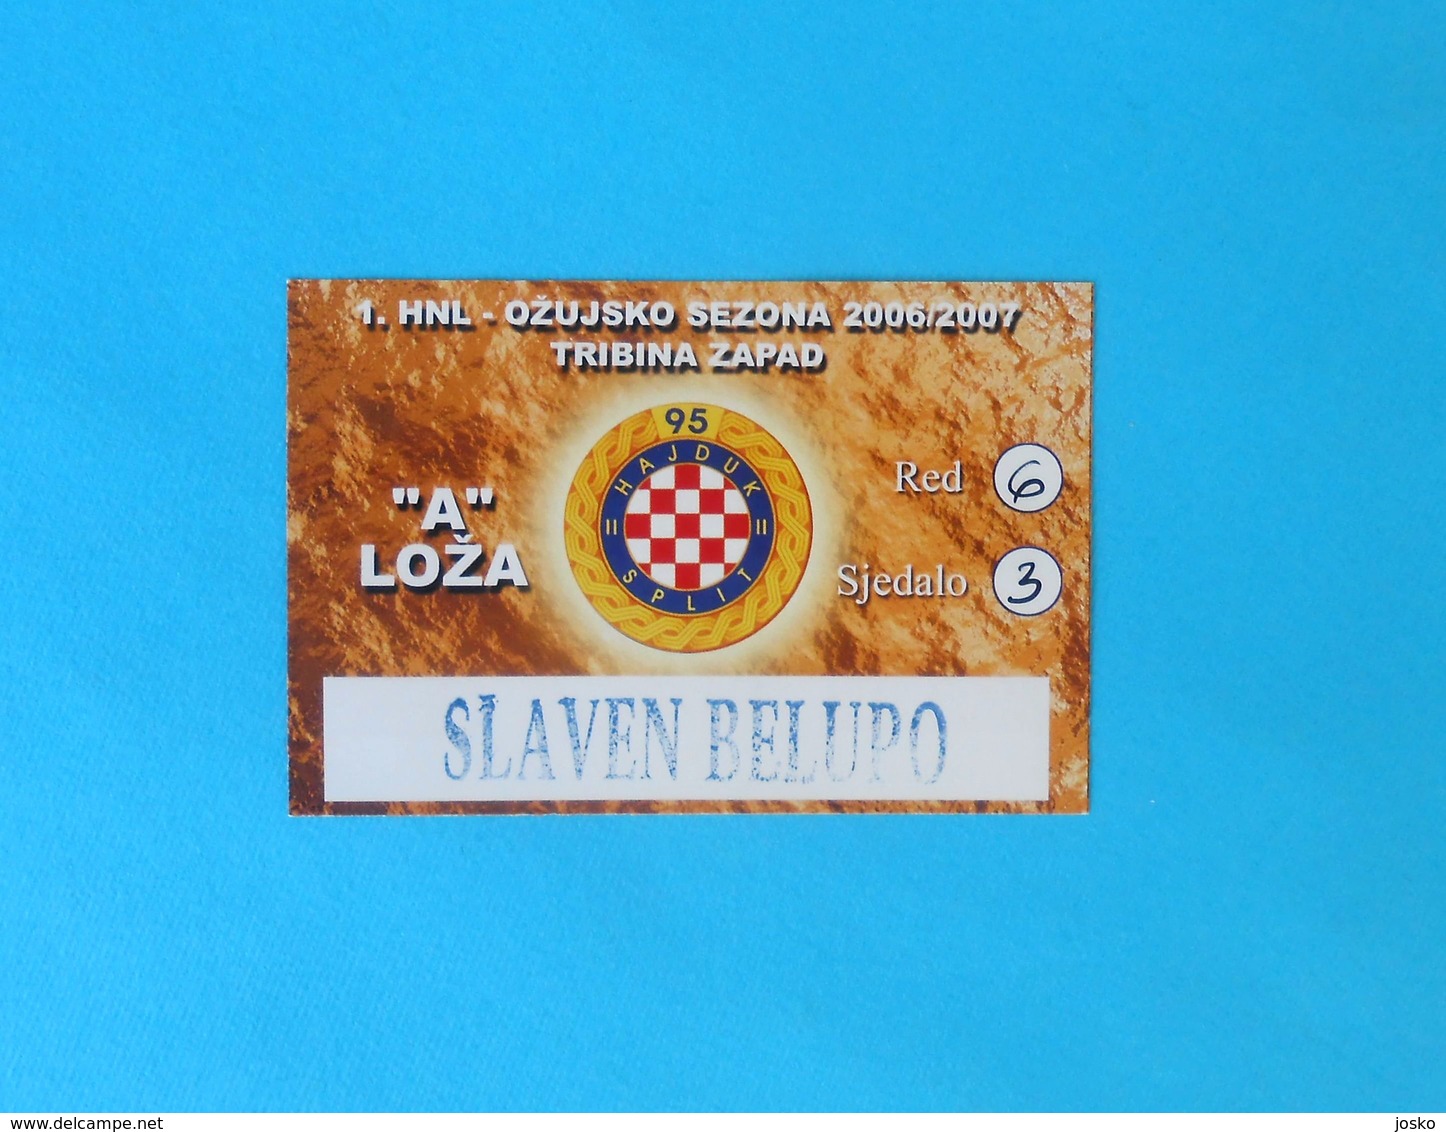 HAJDUK V SLAVEN BELUPO - 2006/07. Croatia Premier League Football Match VIP Ticket * Soccer Fussball Calcio Foot Billet - Match Tickets